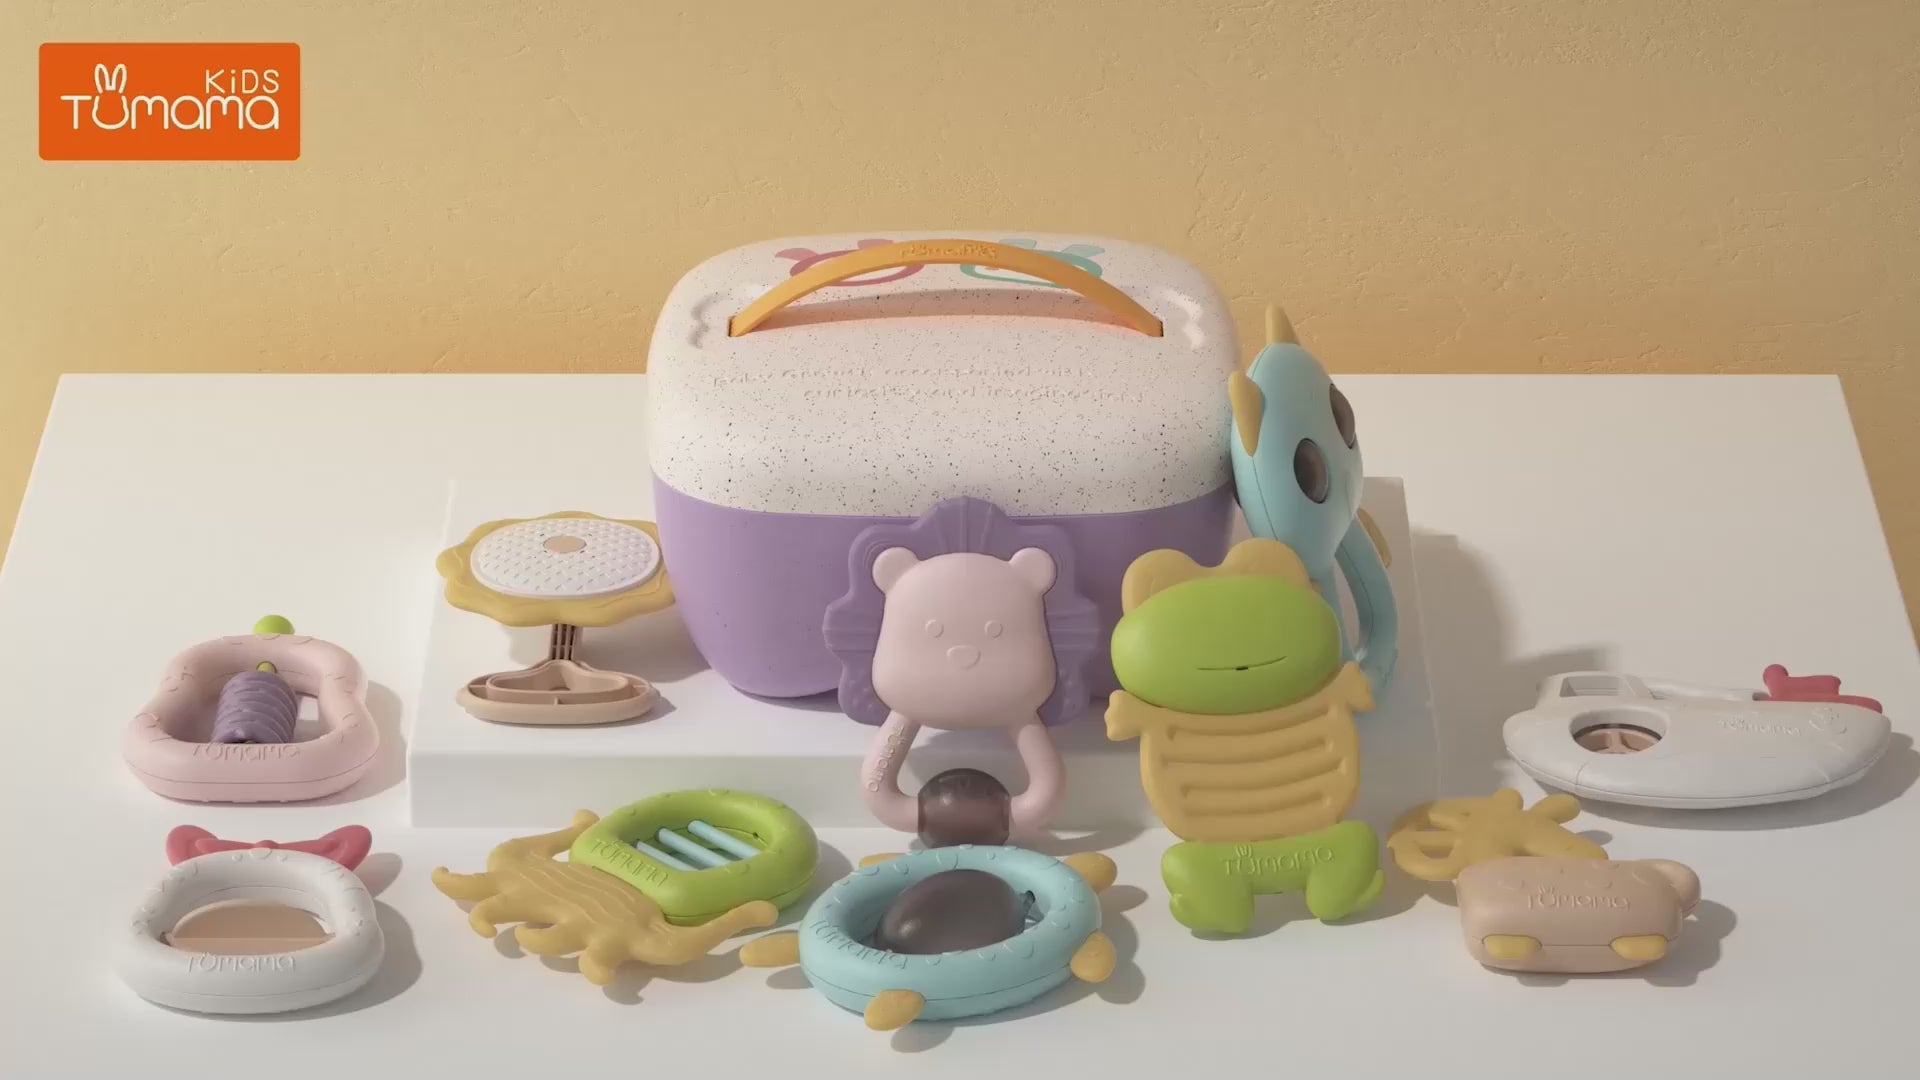 Animation-showing-Tumama's-baby-rattle-teether-toys